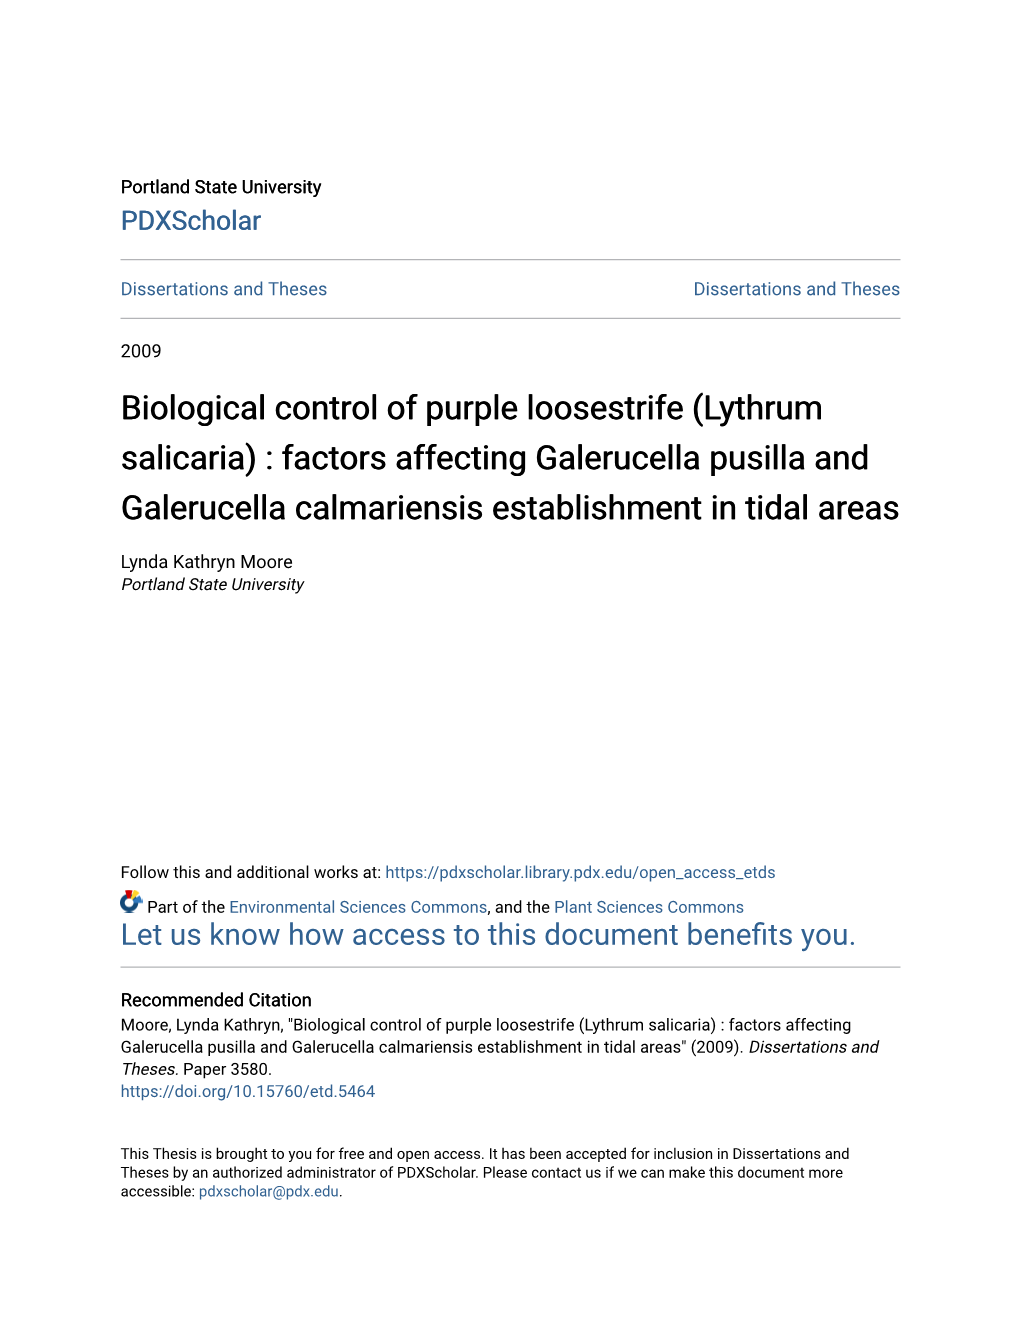 Biological Control of Purple Loosestrife (Lythrum Salicaria) : Factors Affecting Galerucella Pusilla and Galerucella Calmariensis Establishment in Tidal Areas